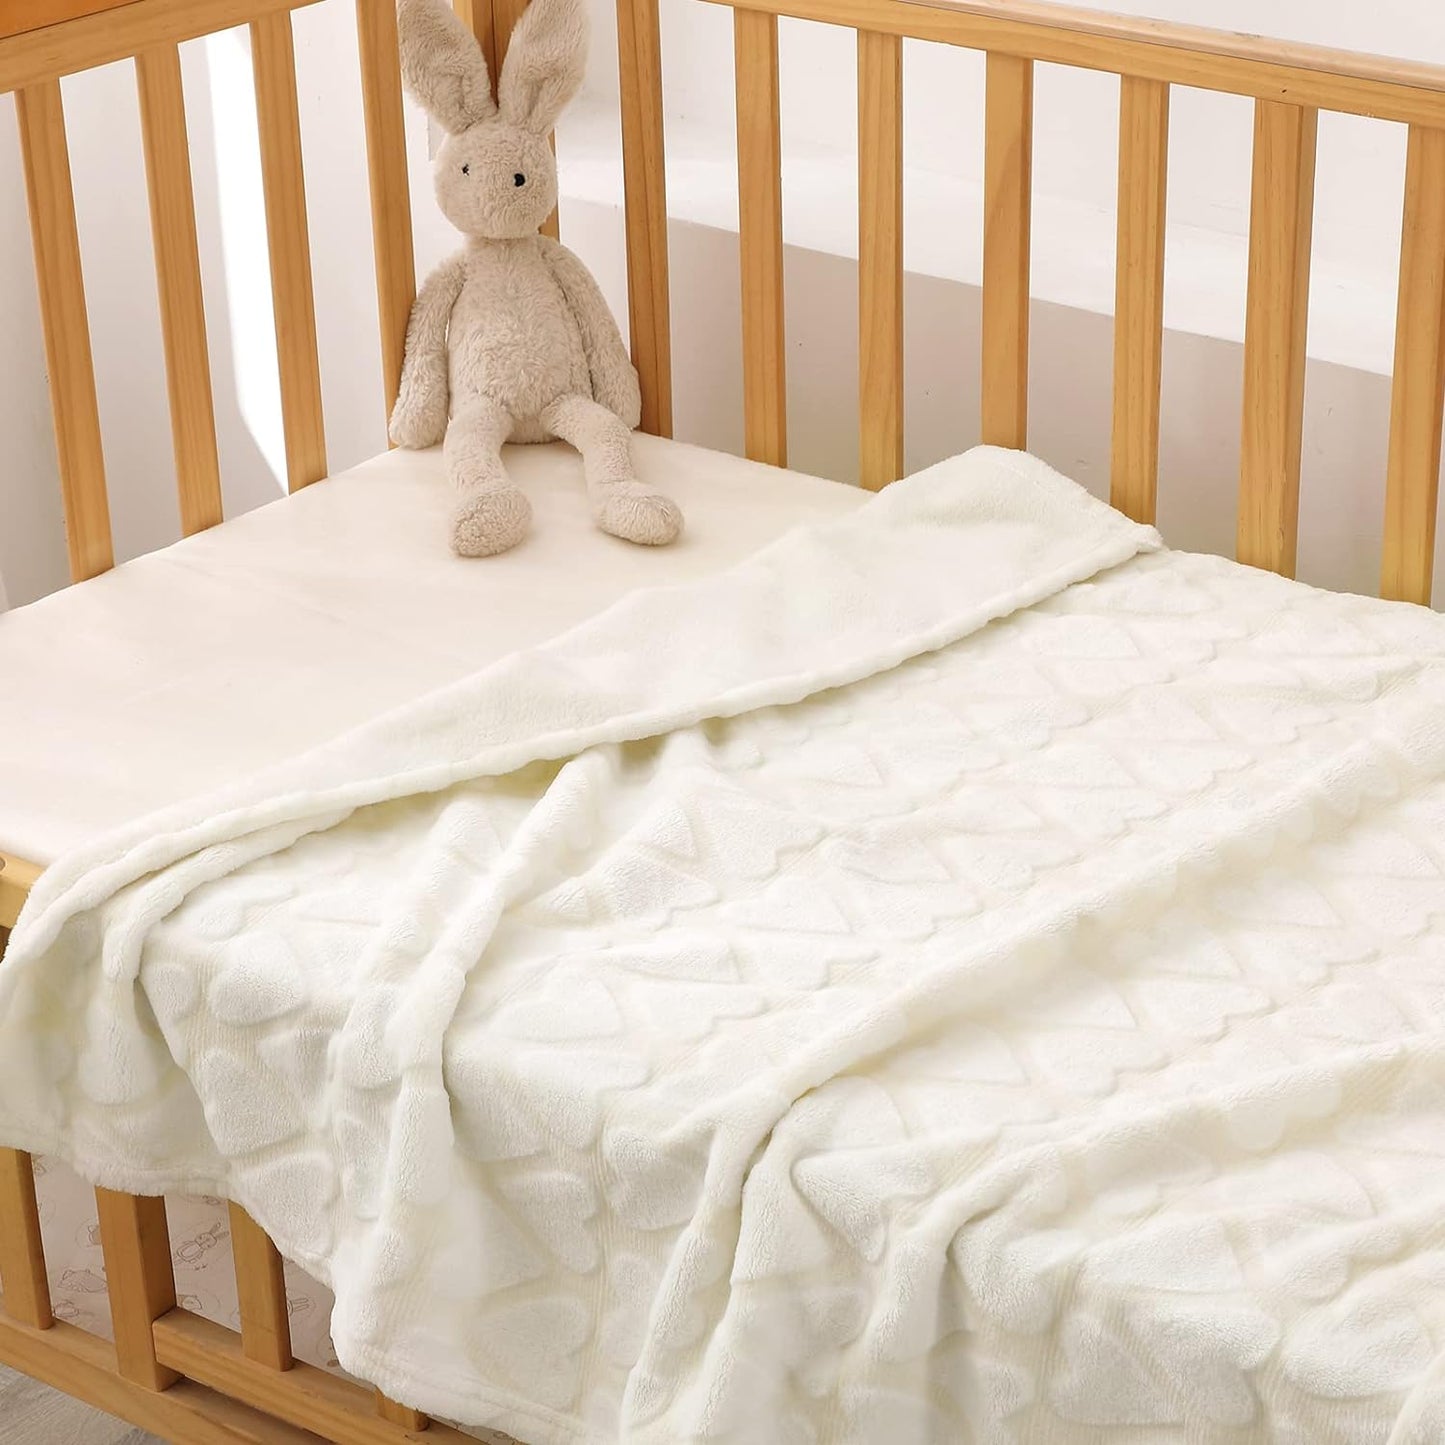 Bertte Plush Baby Blanket for Boys Girls | Swaddle Receiving Blankets Super Soft Warm Lightweight Breathable for Infant Toddler Crib Stroller - 40"x50" Large, Green Hearts Embossed